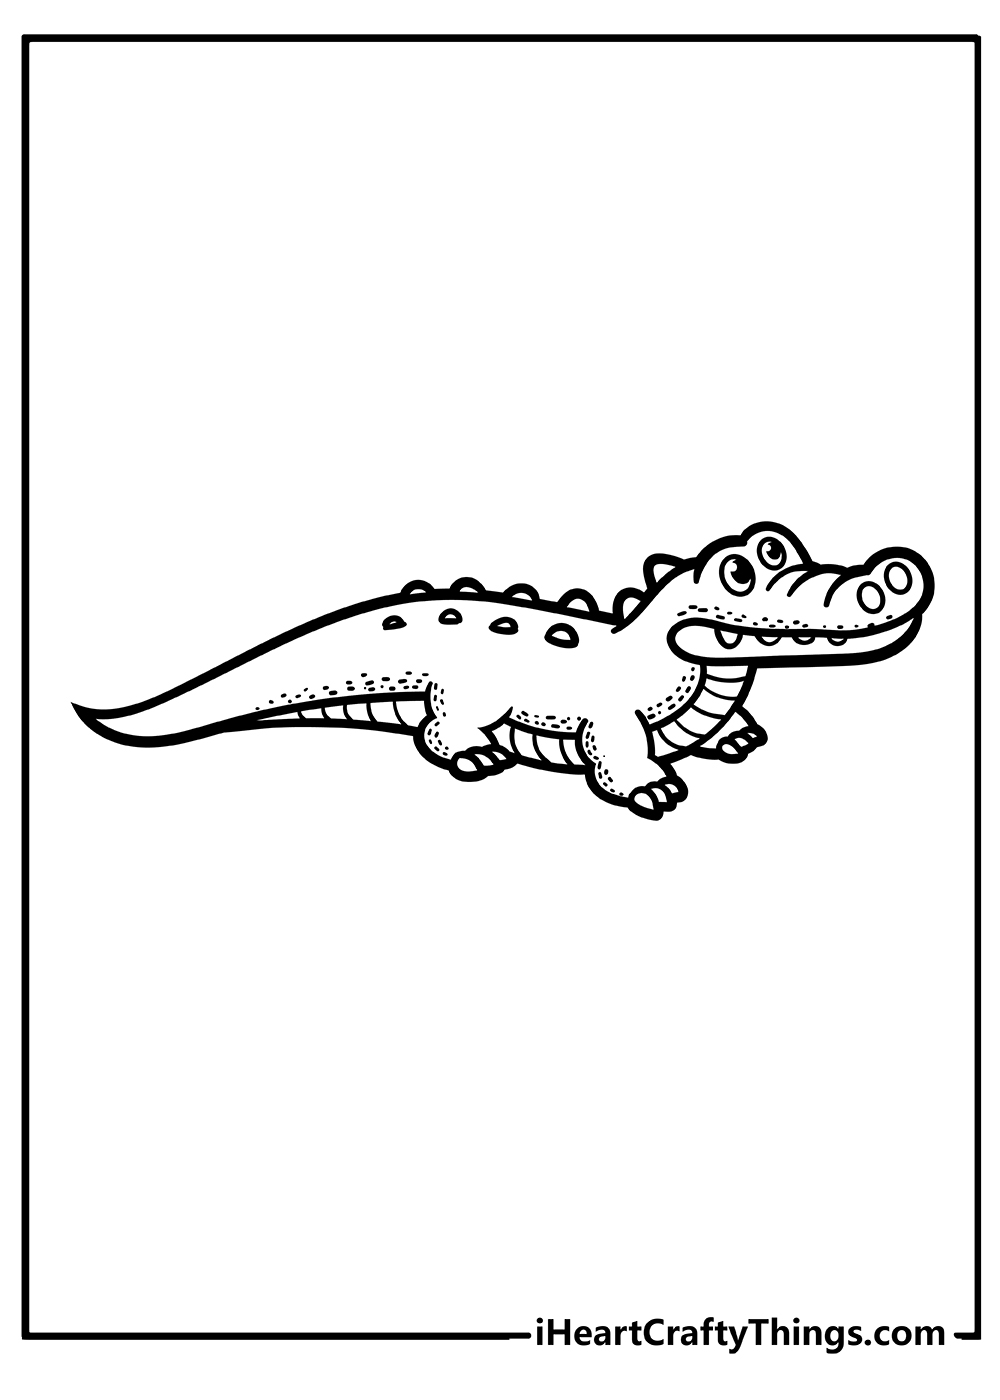 Crocodile Coloring Original Sheet for children free download